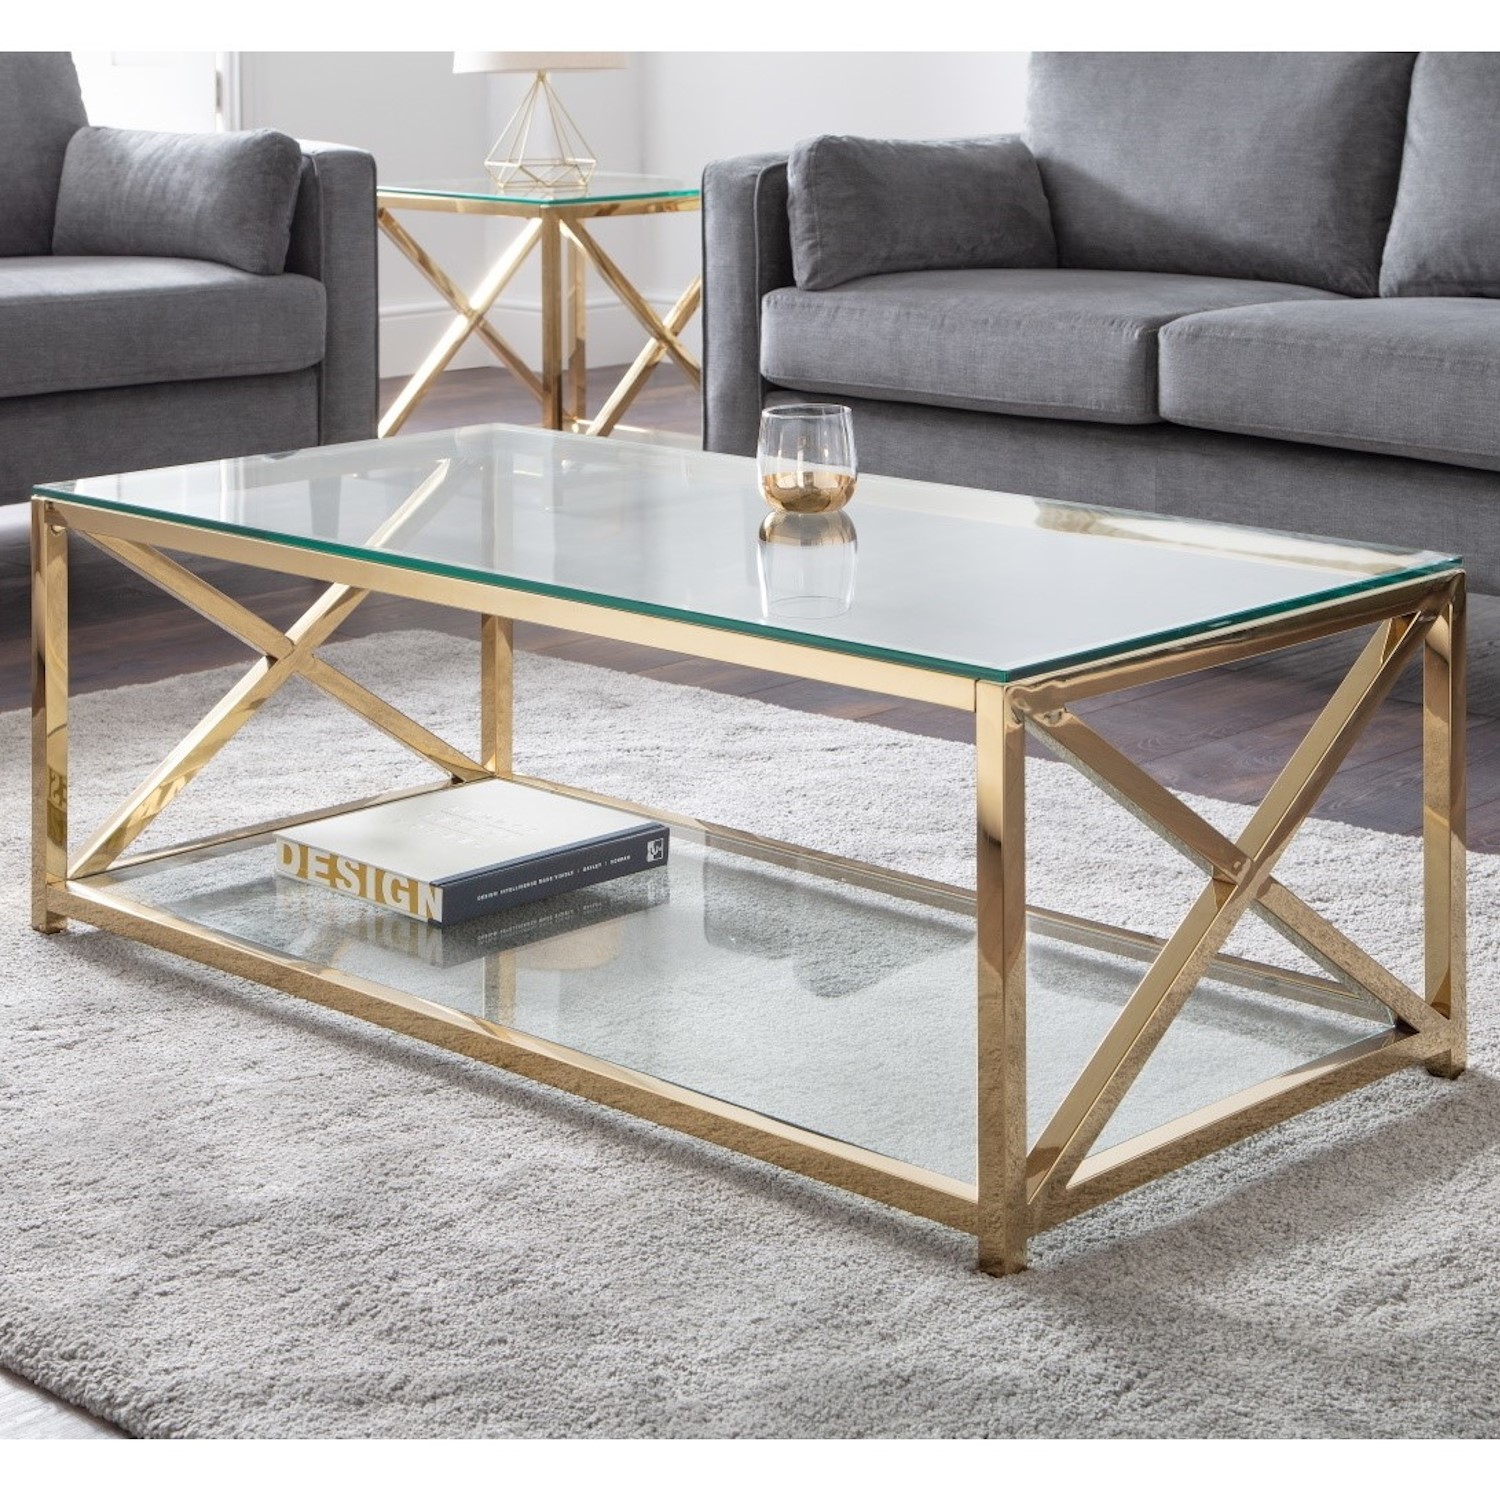 Photo of Large gold & glass coffee table - julian bowen